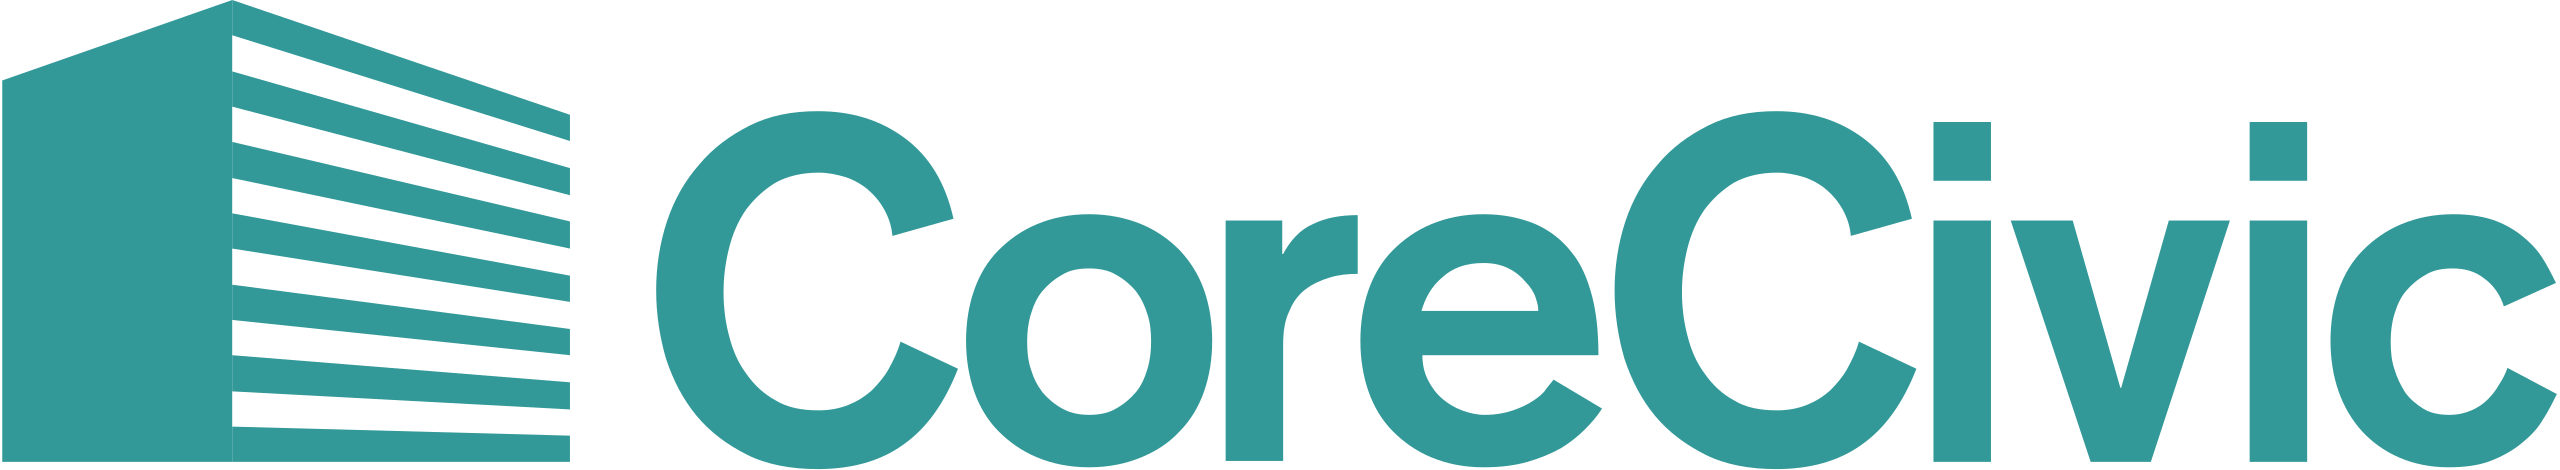 corecivic logo